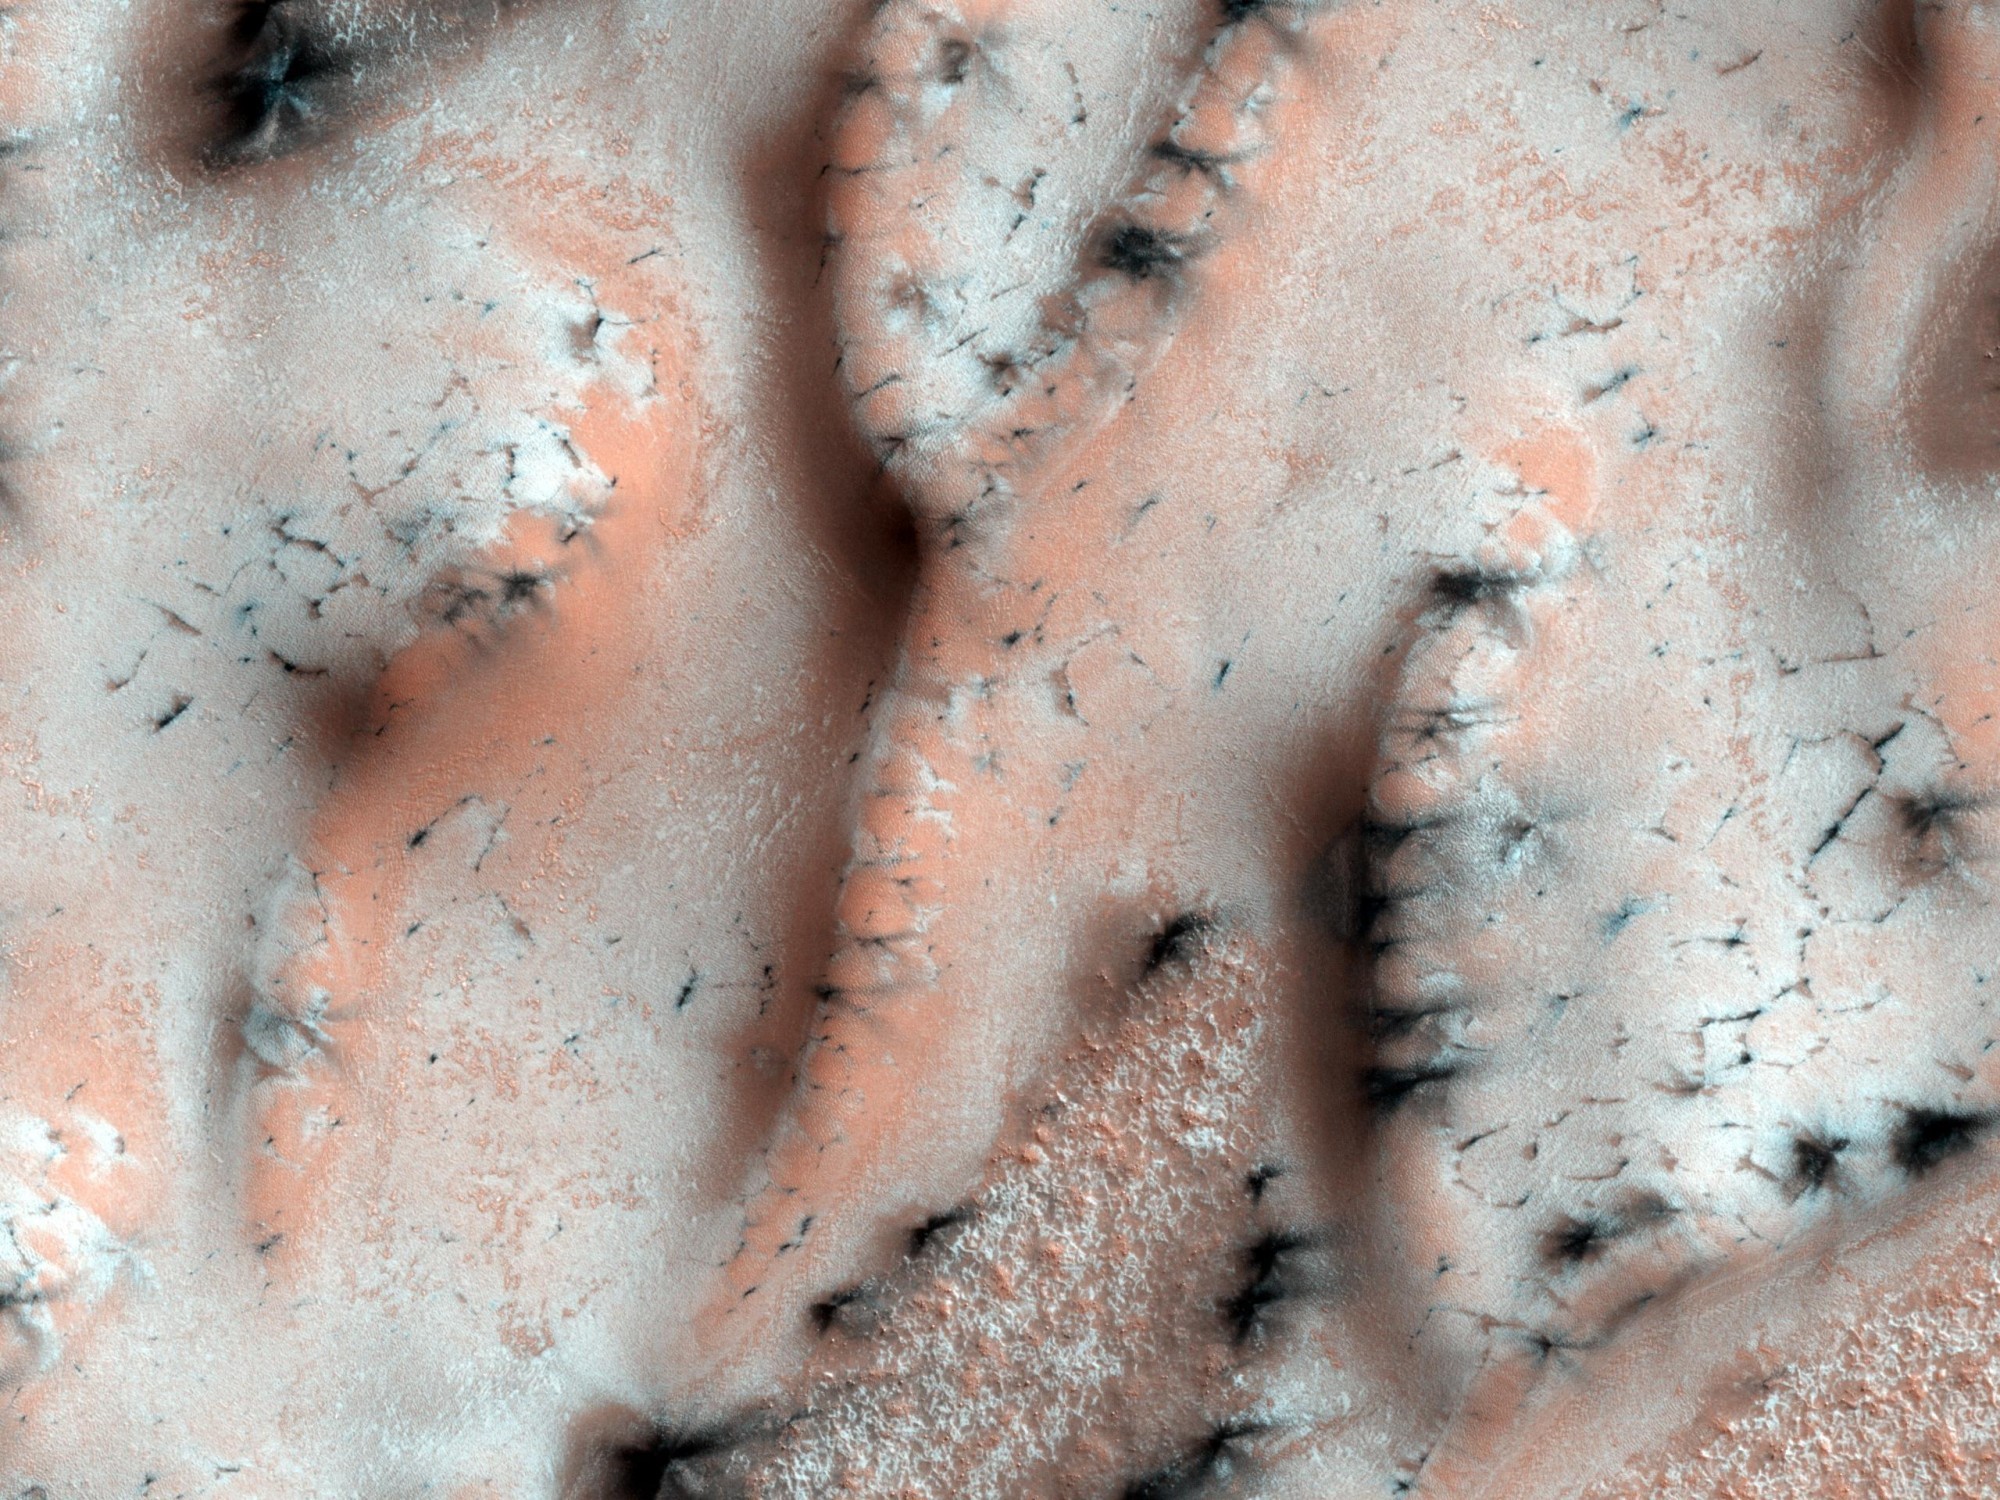 Melting ice on Mars